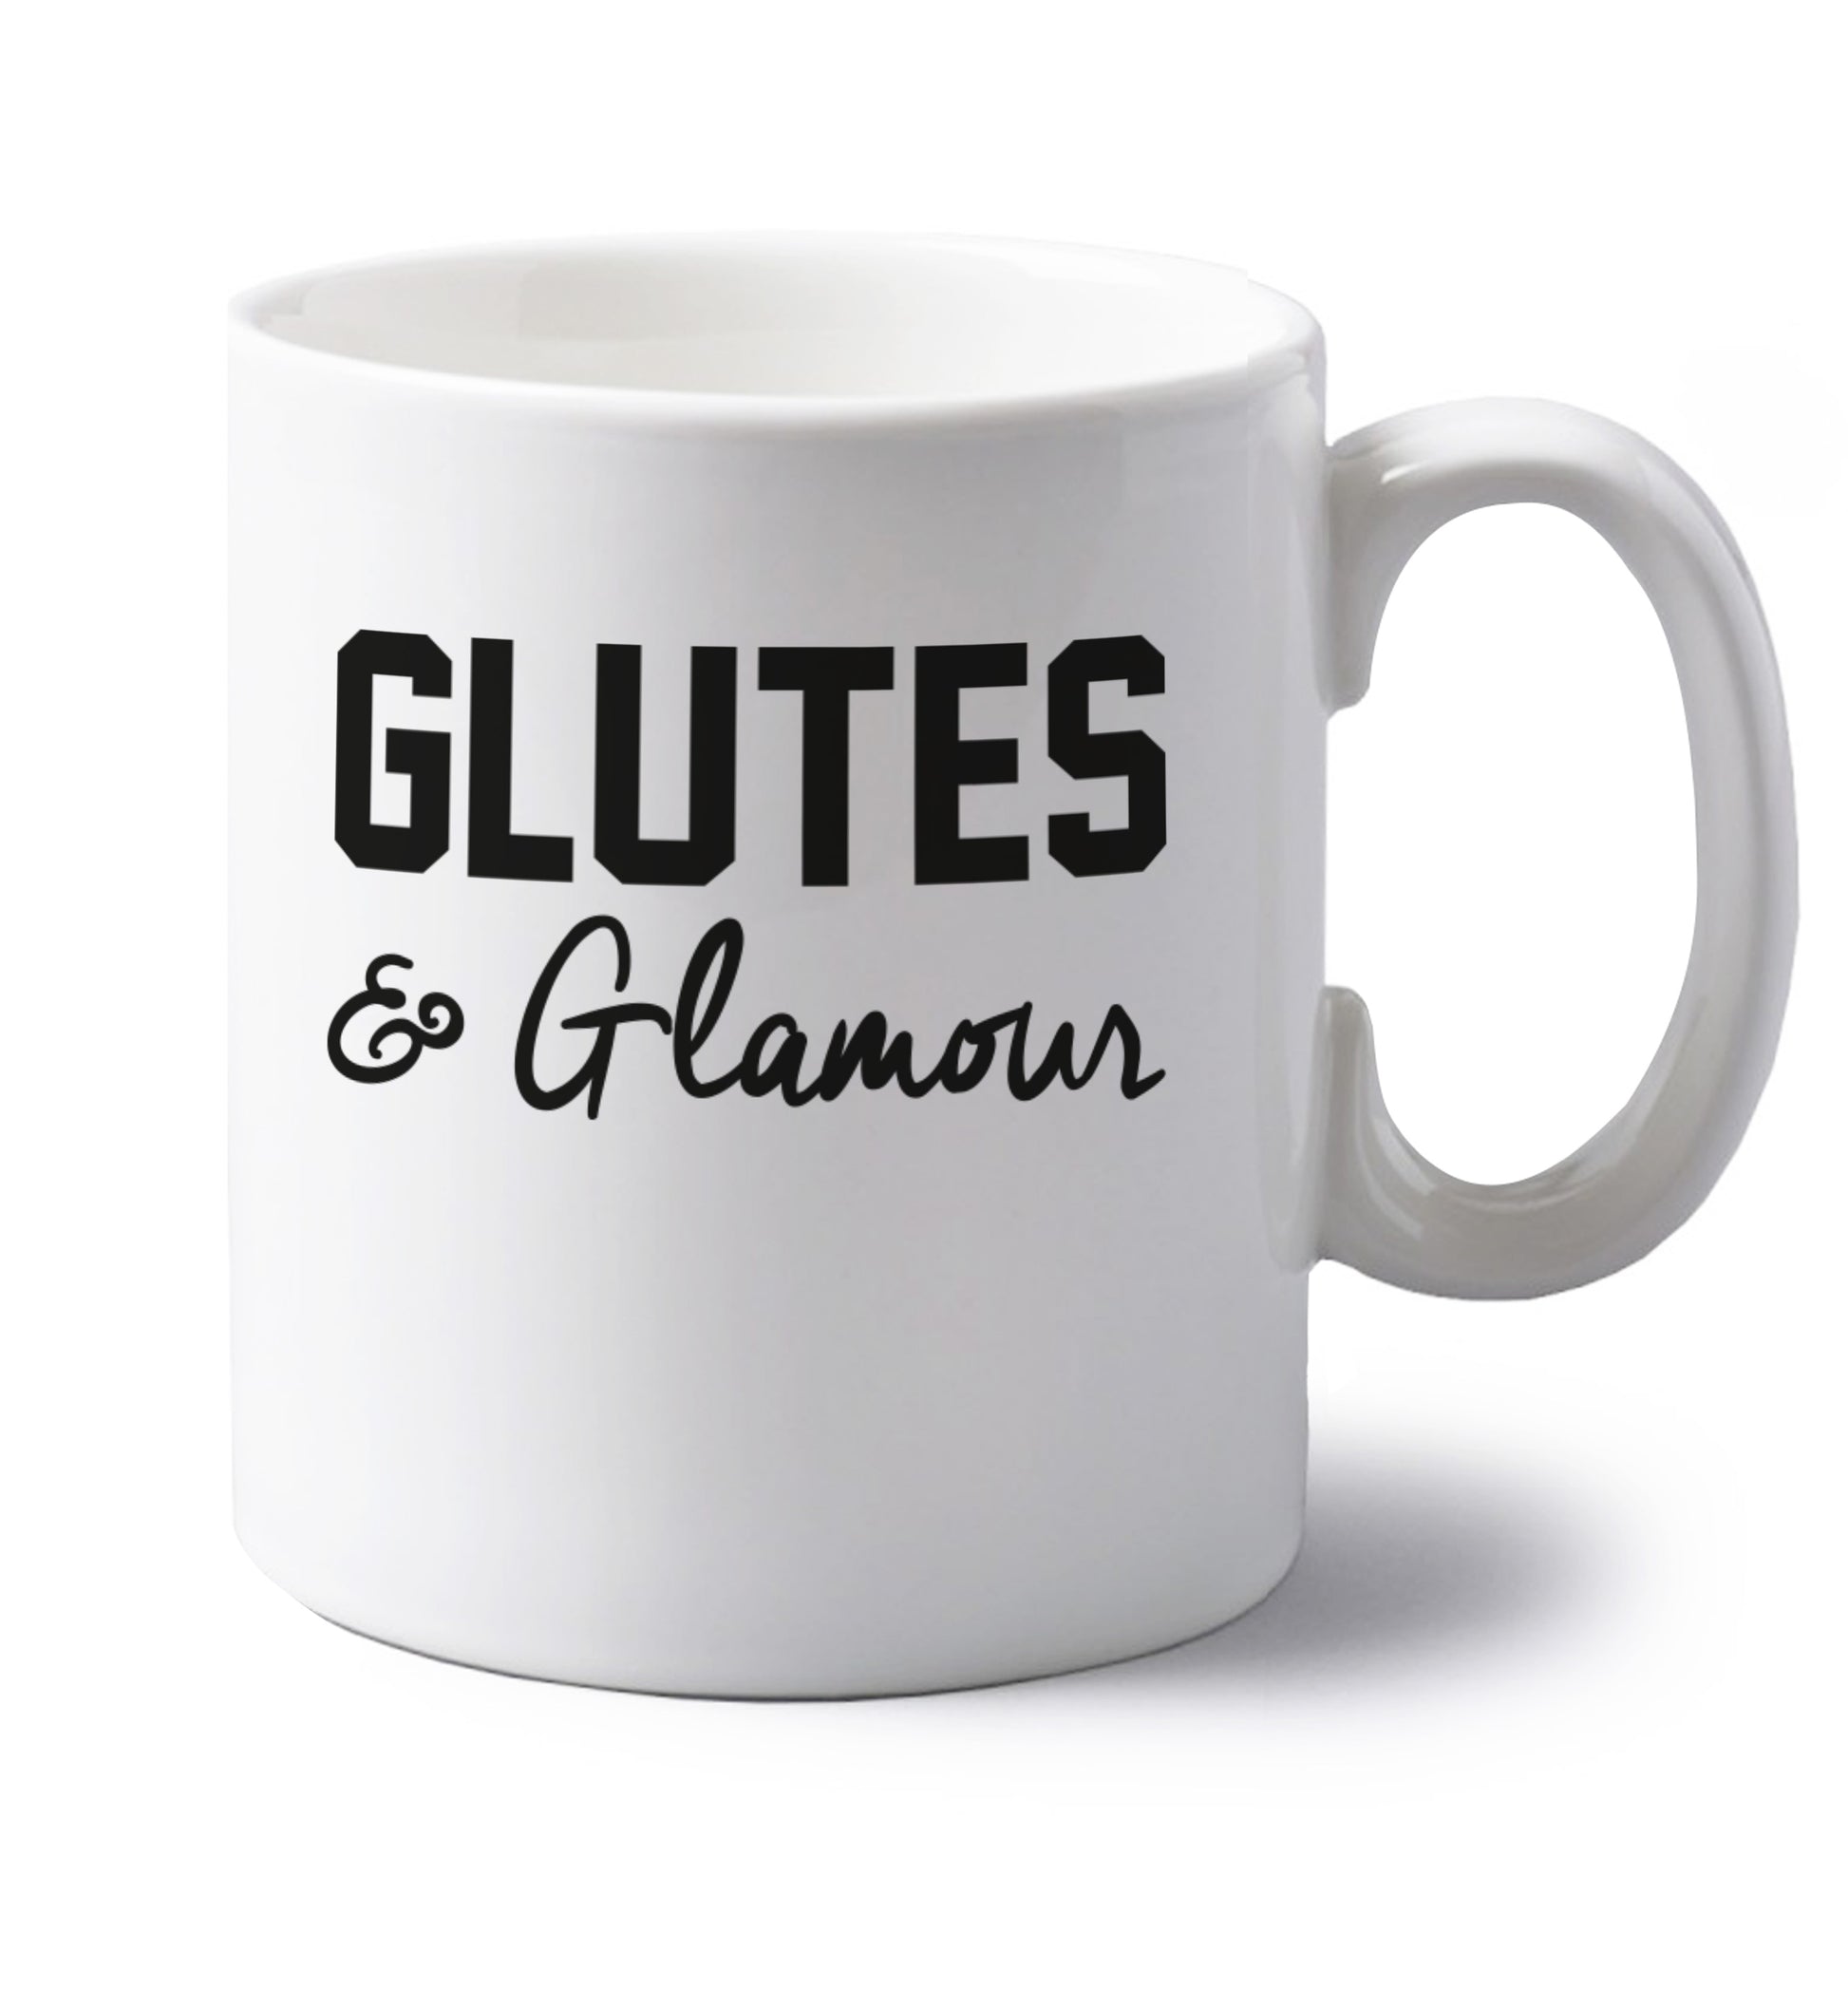 Glutes and glamour left handed white ceramic mug 